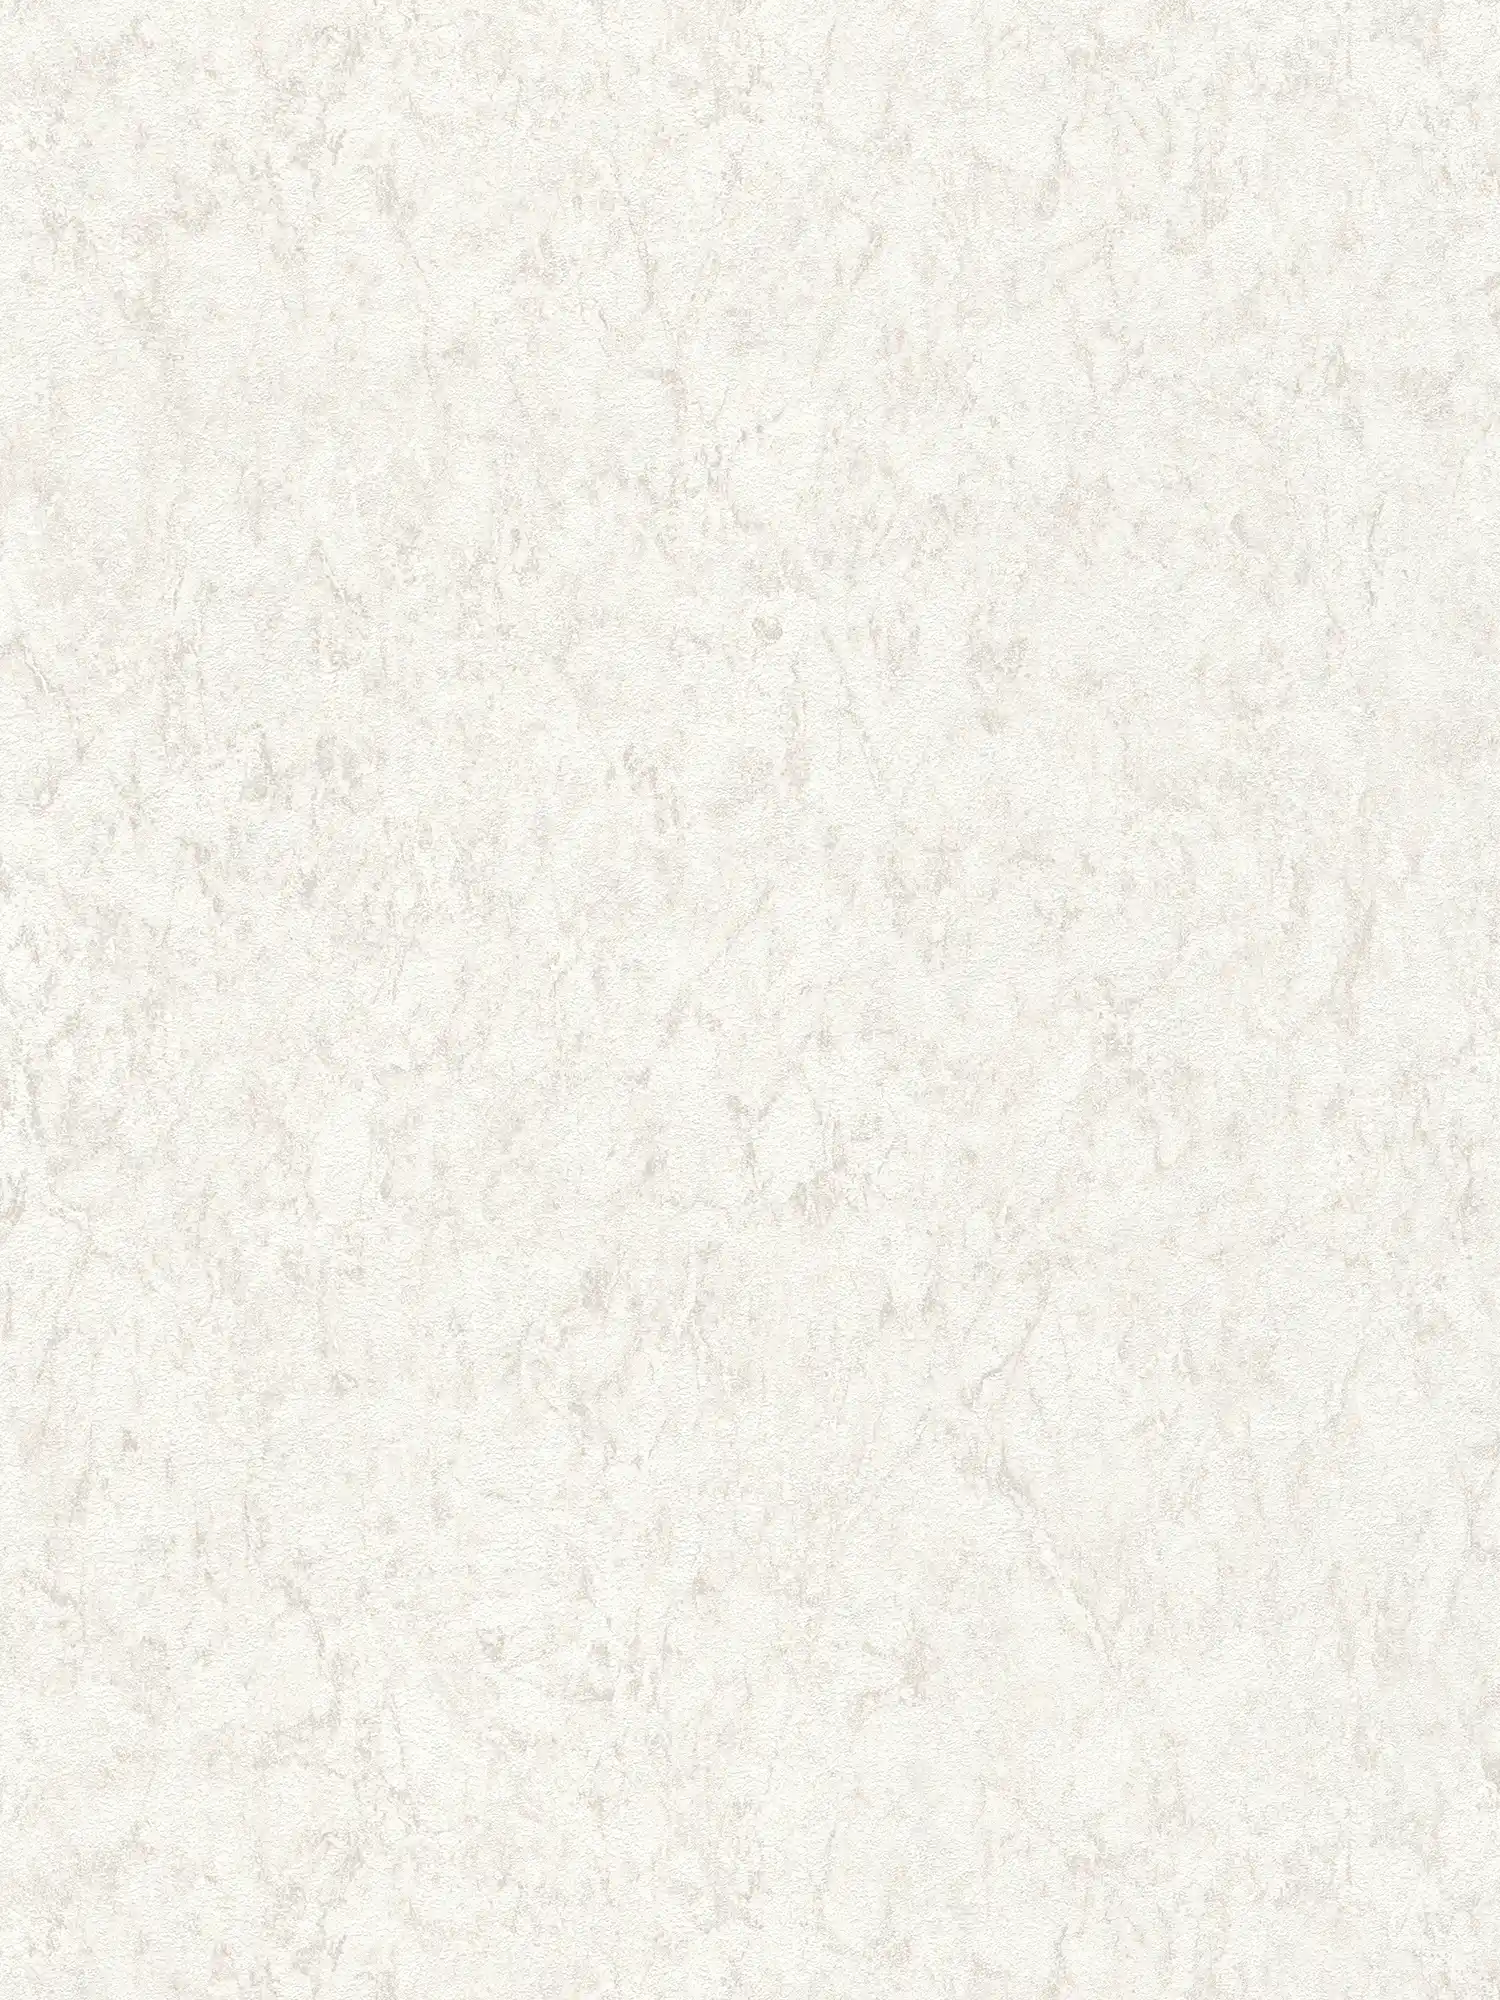 Plain wallpaper with texture effect & mottled design - white, grey
